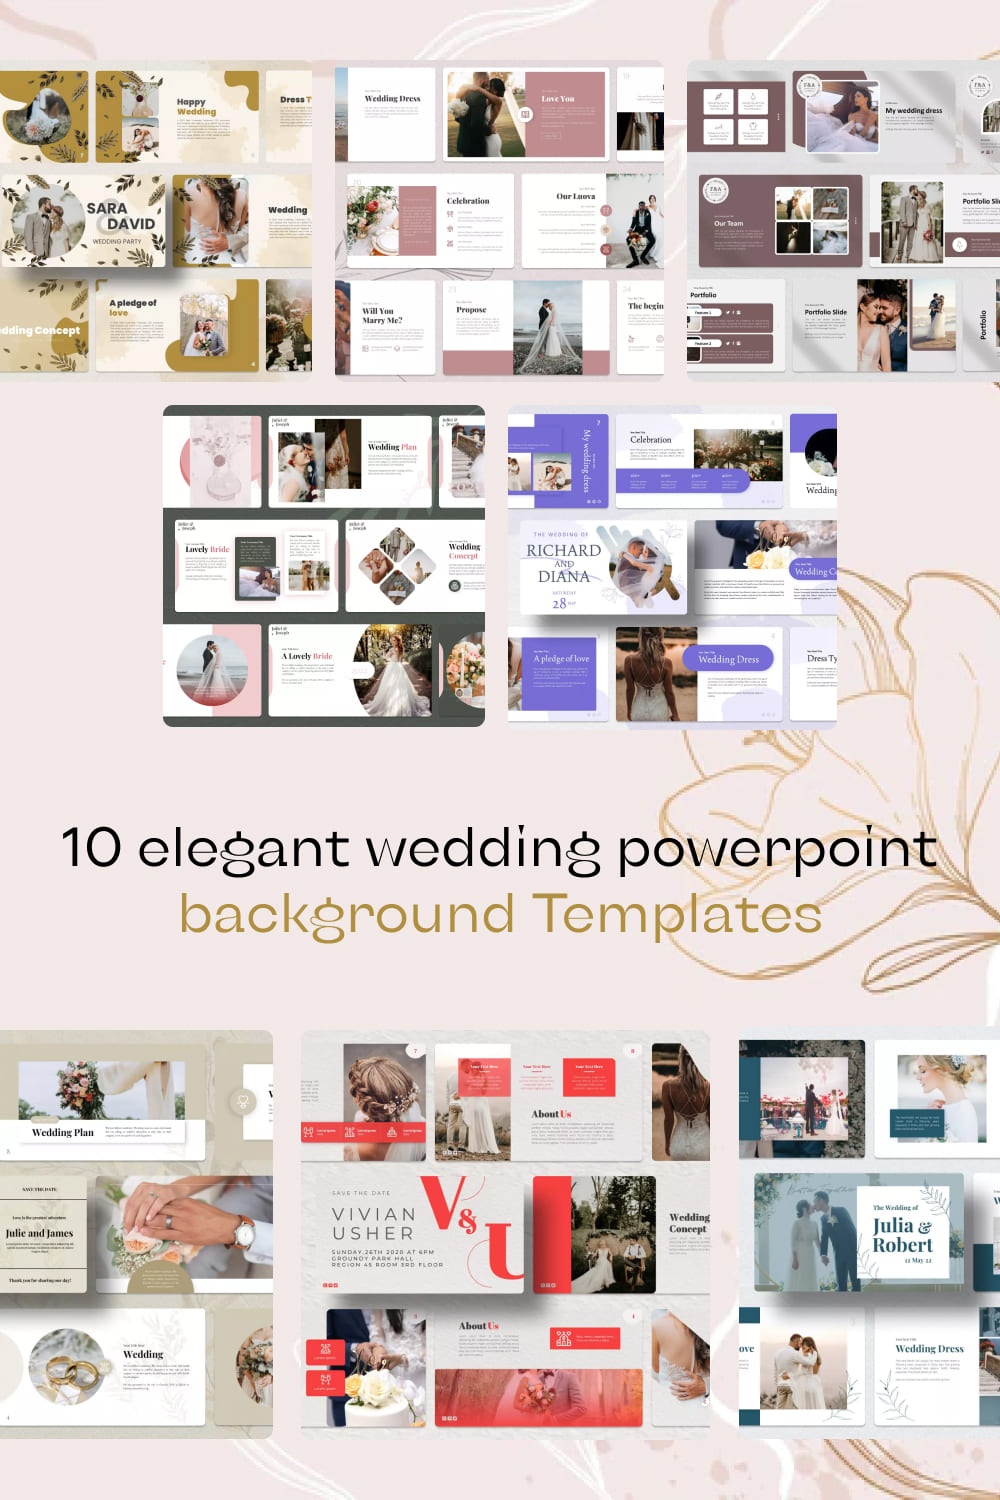 Elegant Wedding Powerpoint Background Templates Pinterest.